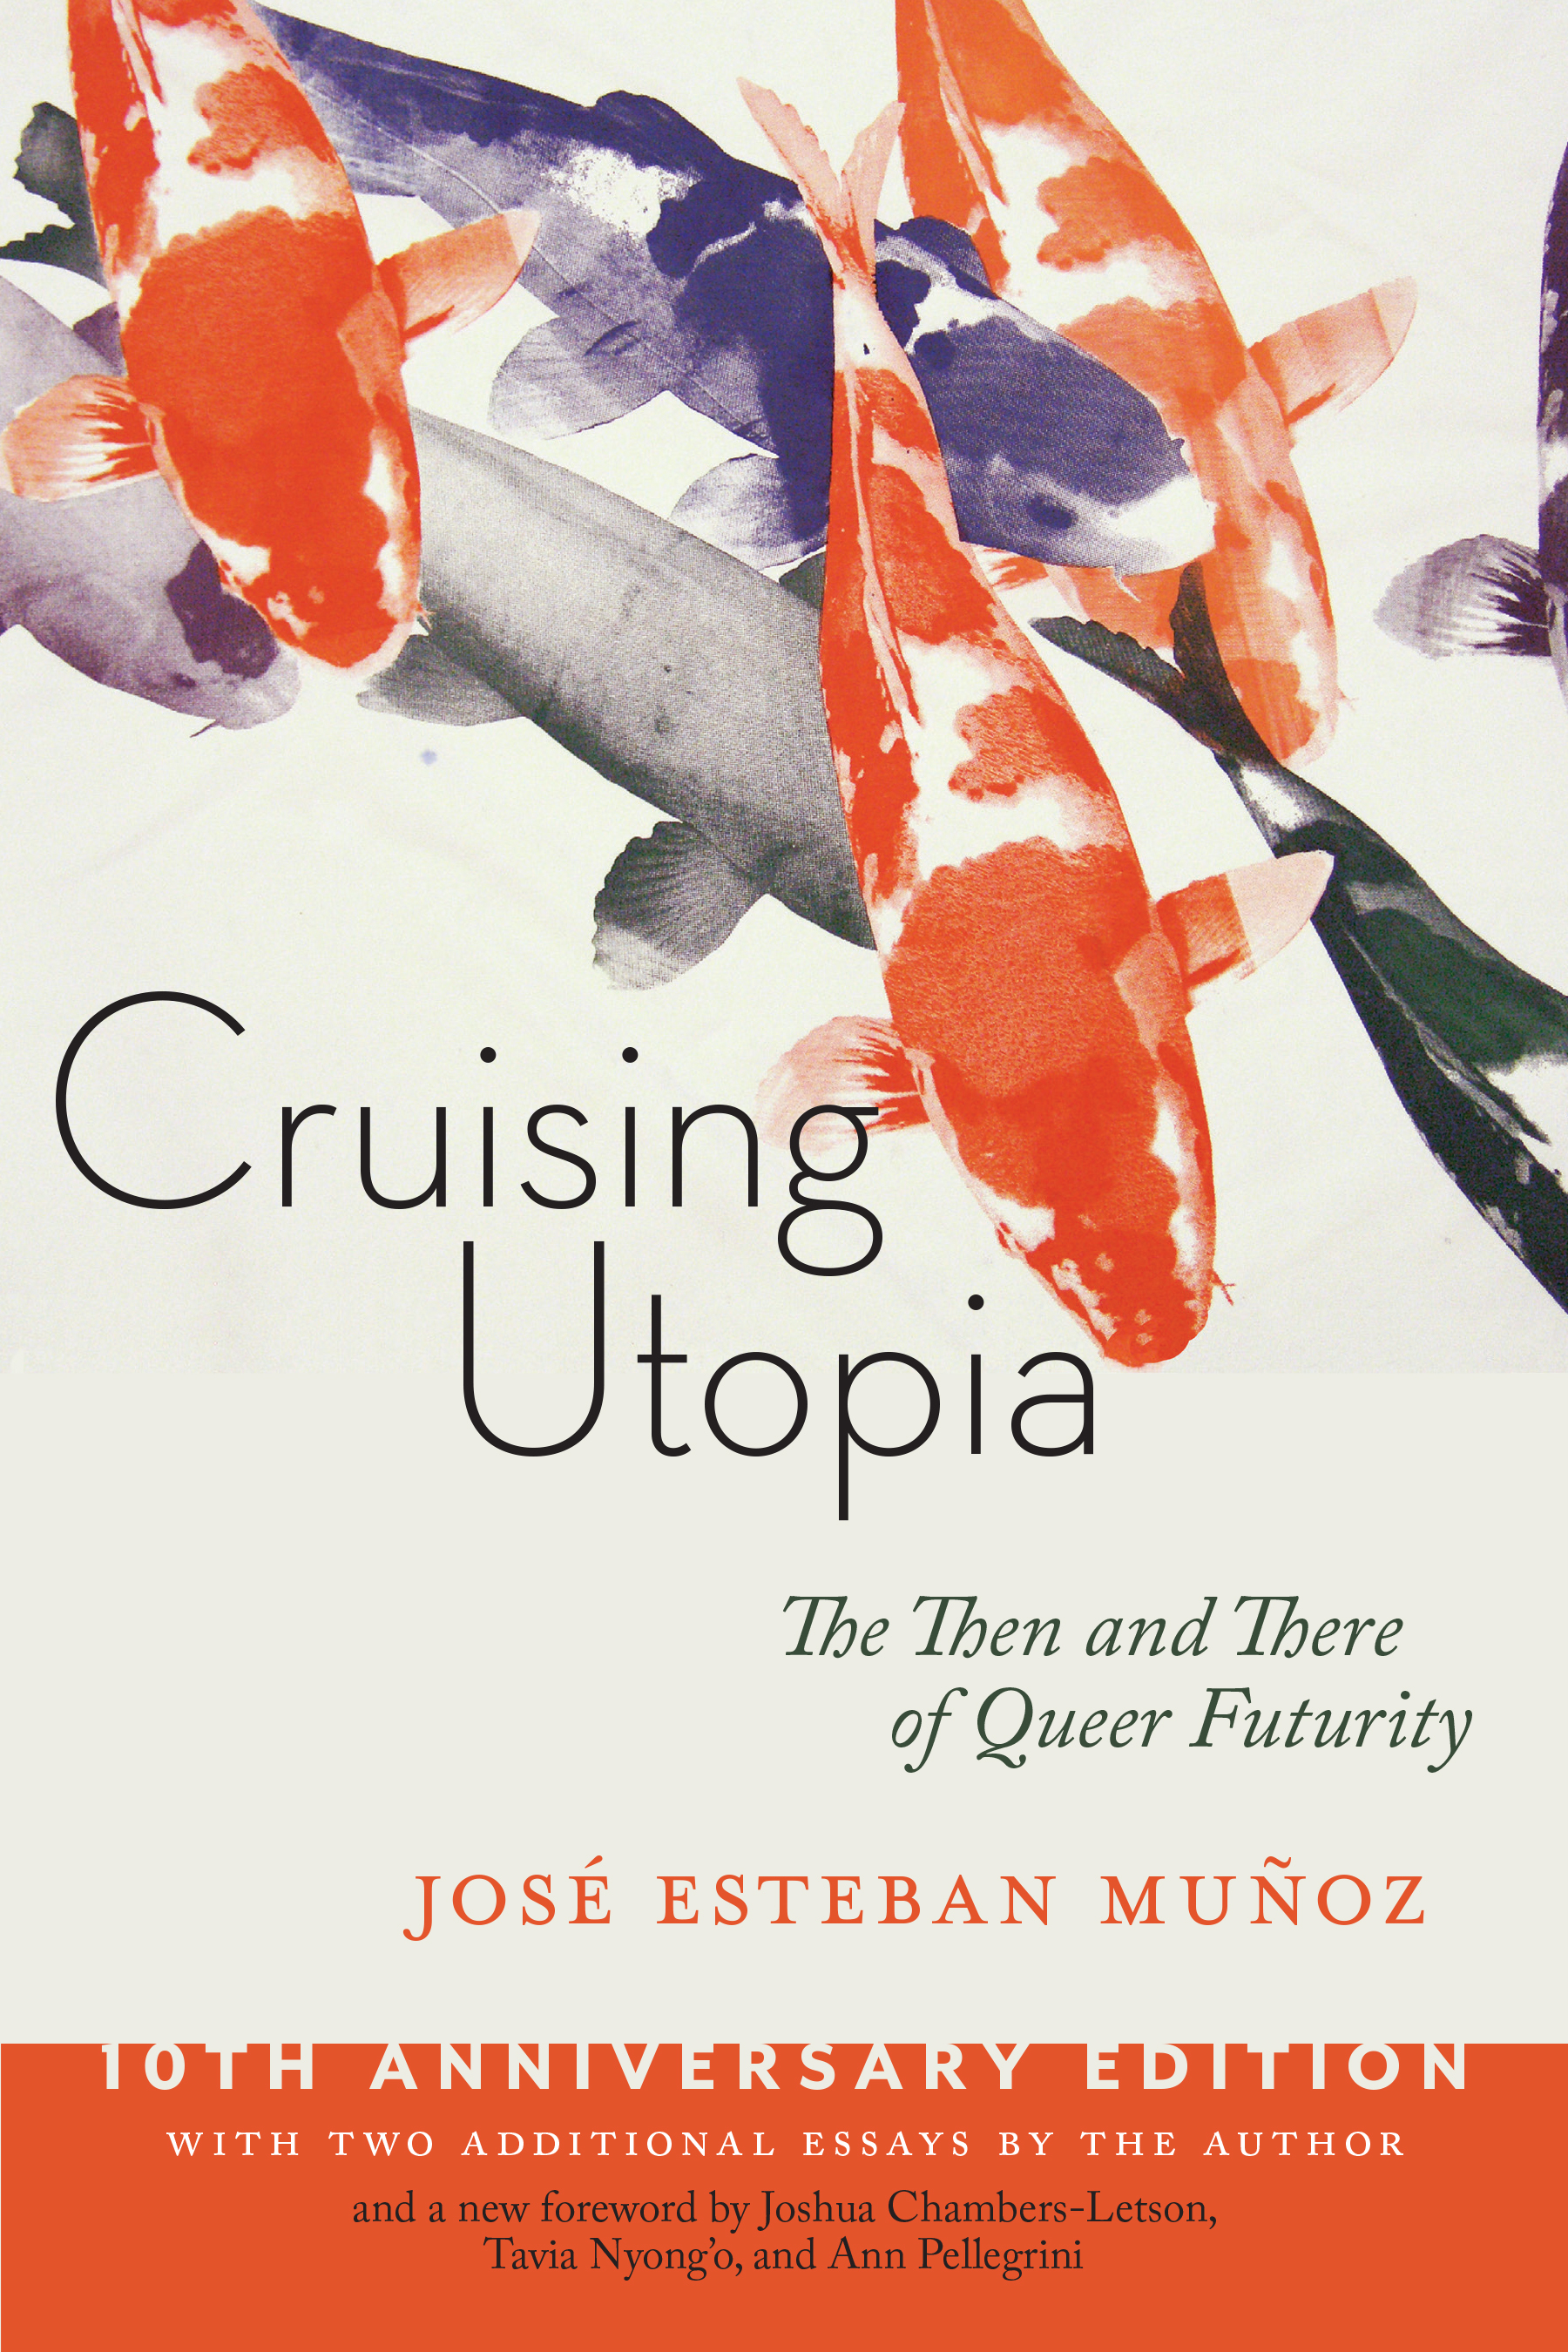 José Esteban Muñoz's "Cruising Utopia"